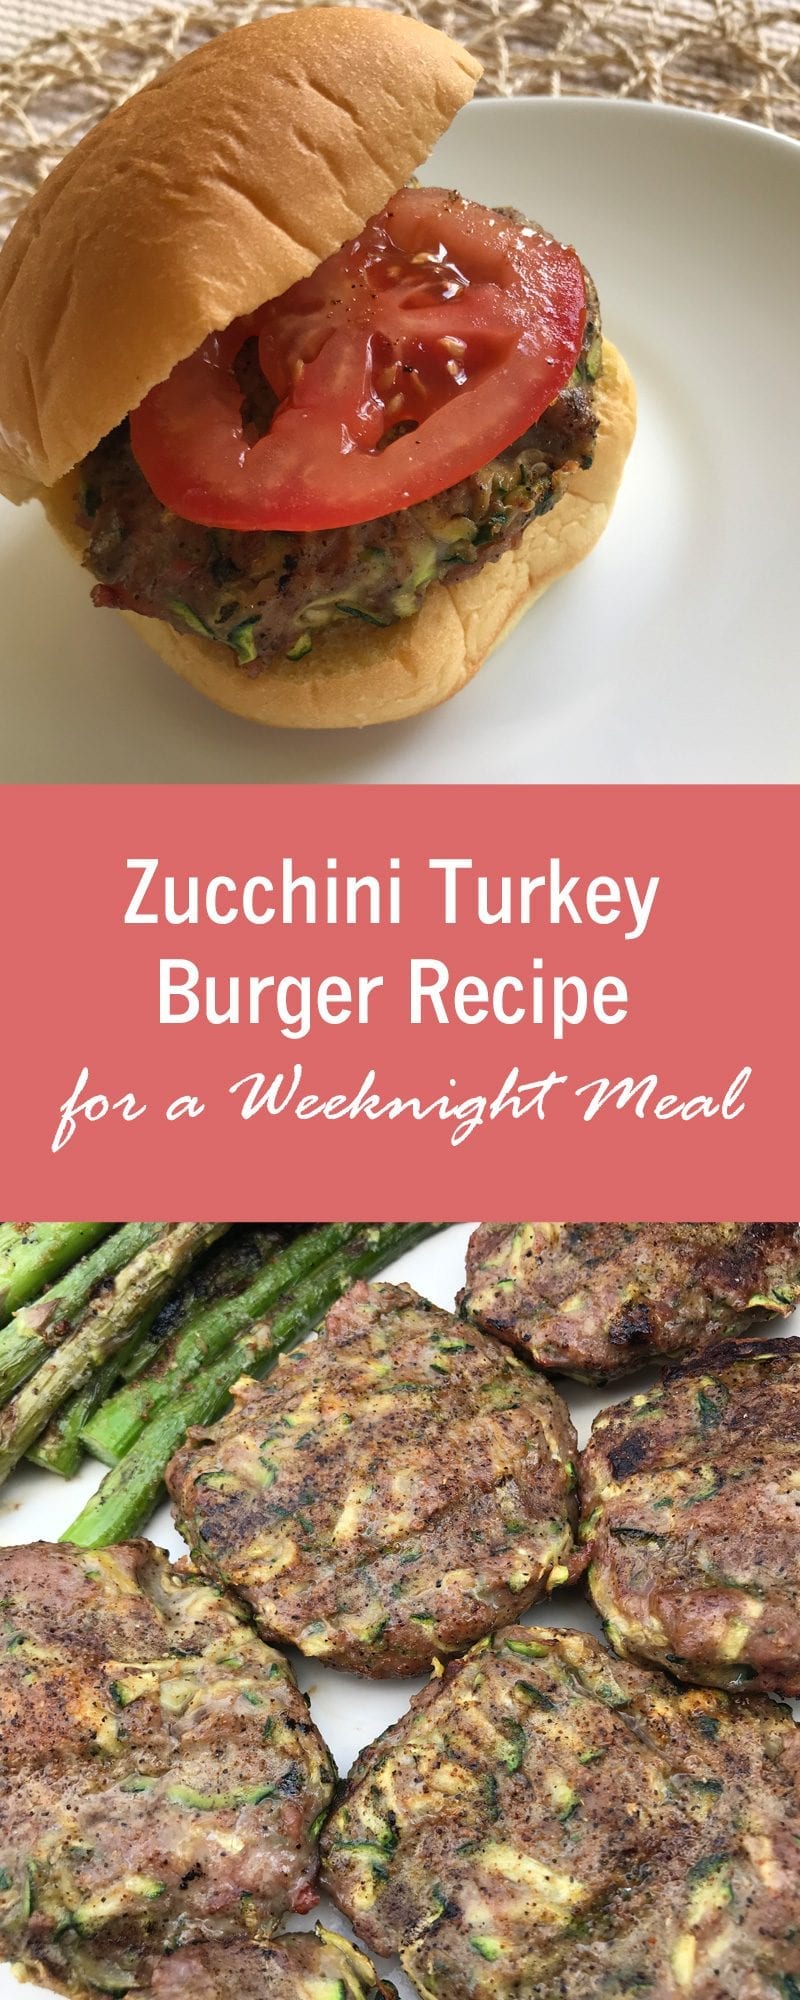 Zucchini Turkey Burger Recipe for a Weeknight Meal